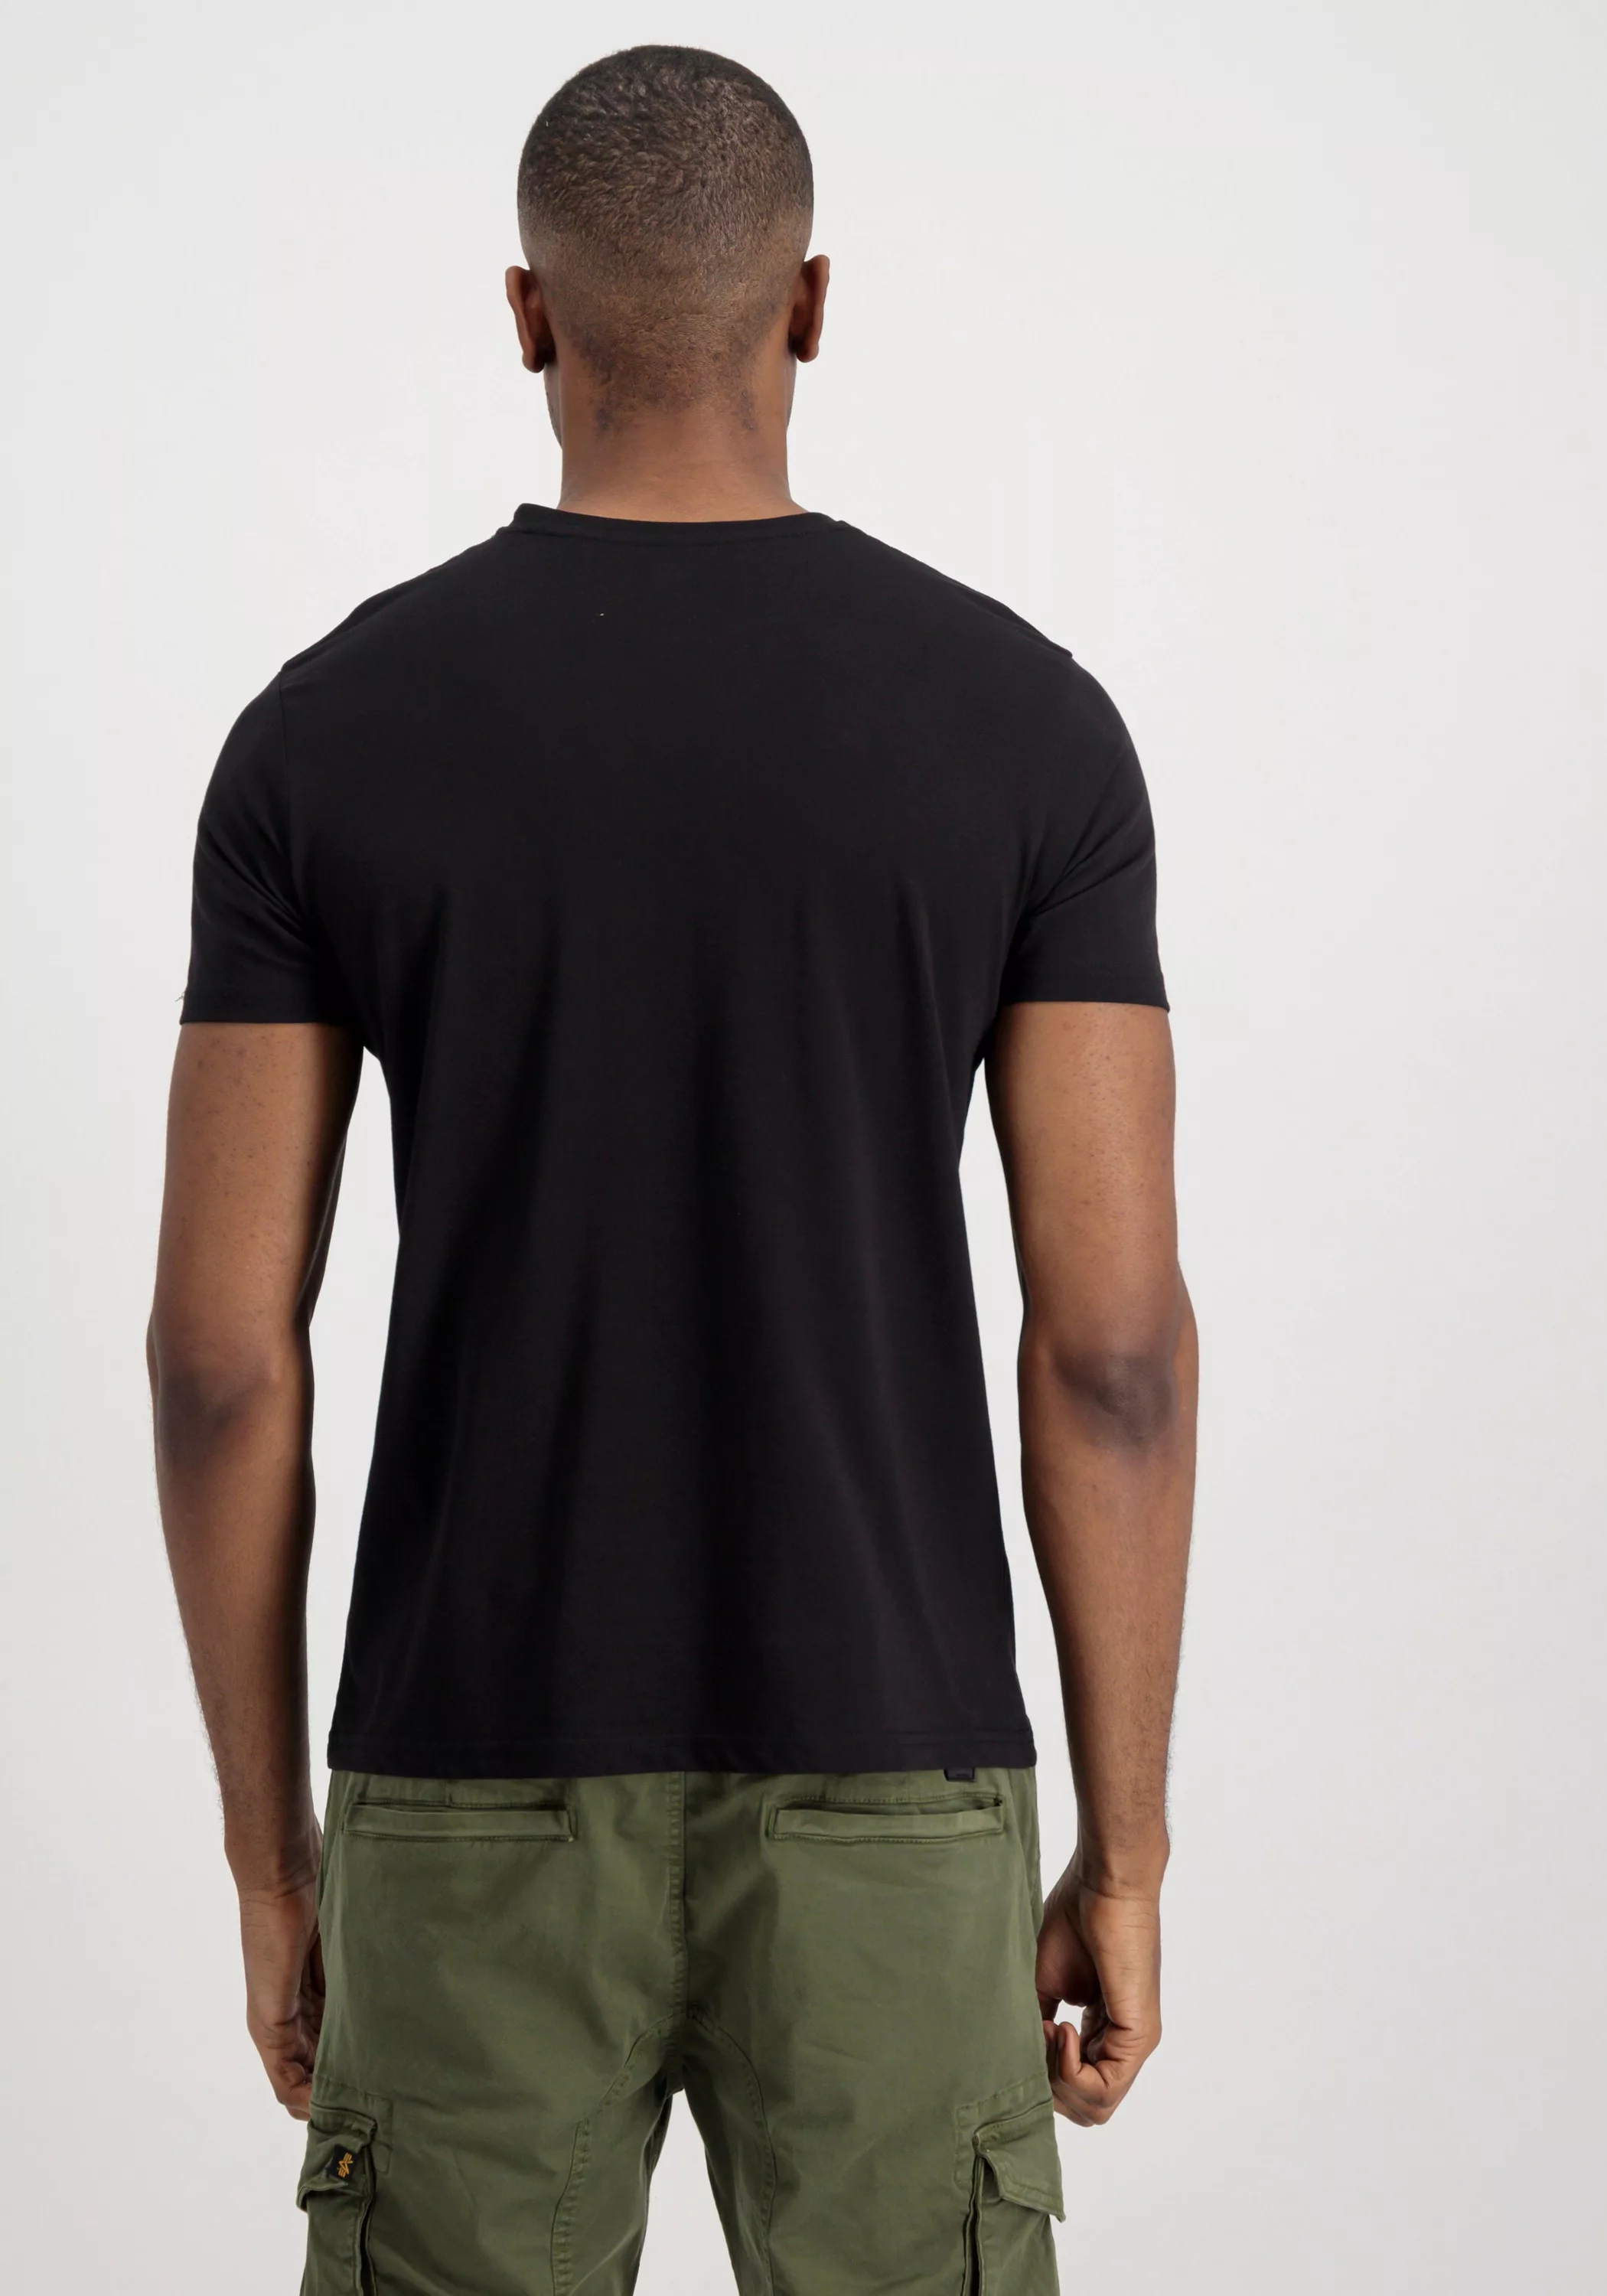 Alpha Industries T-Shirt "ALPHA INDUSTRIES Men - T-Shirts Basic T 2 Pack" günstig online kaufen